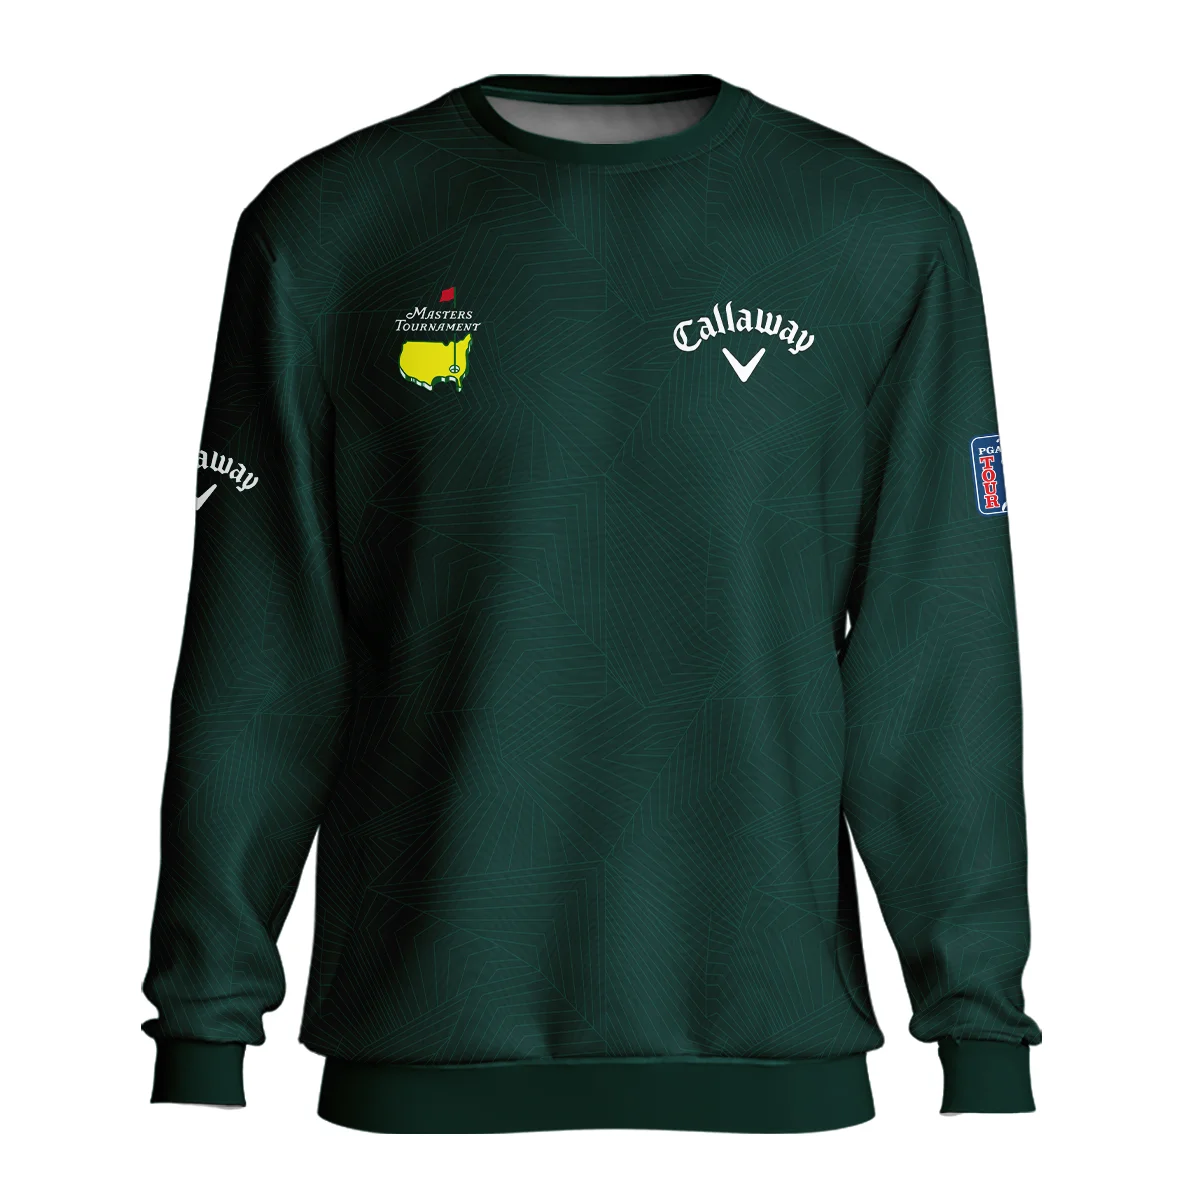 Masters Tournament Callaway Pattern Sport Jersey Dark Green Hoodie Shirt Style Classic Hoodie Shirt